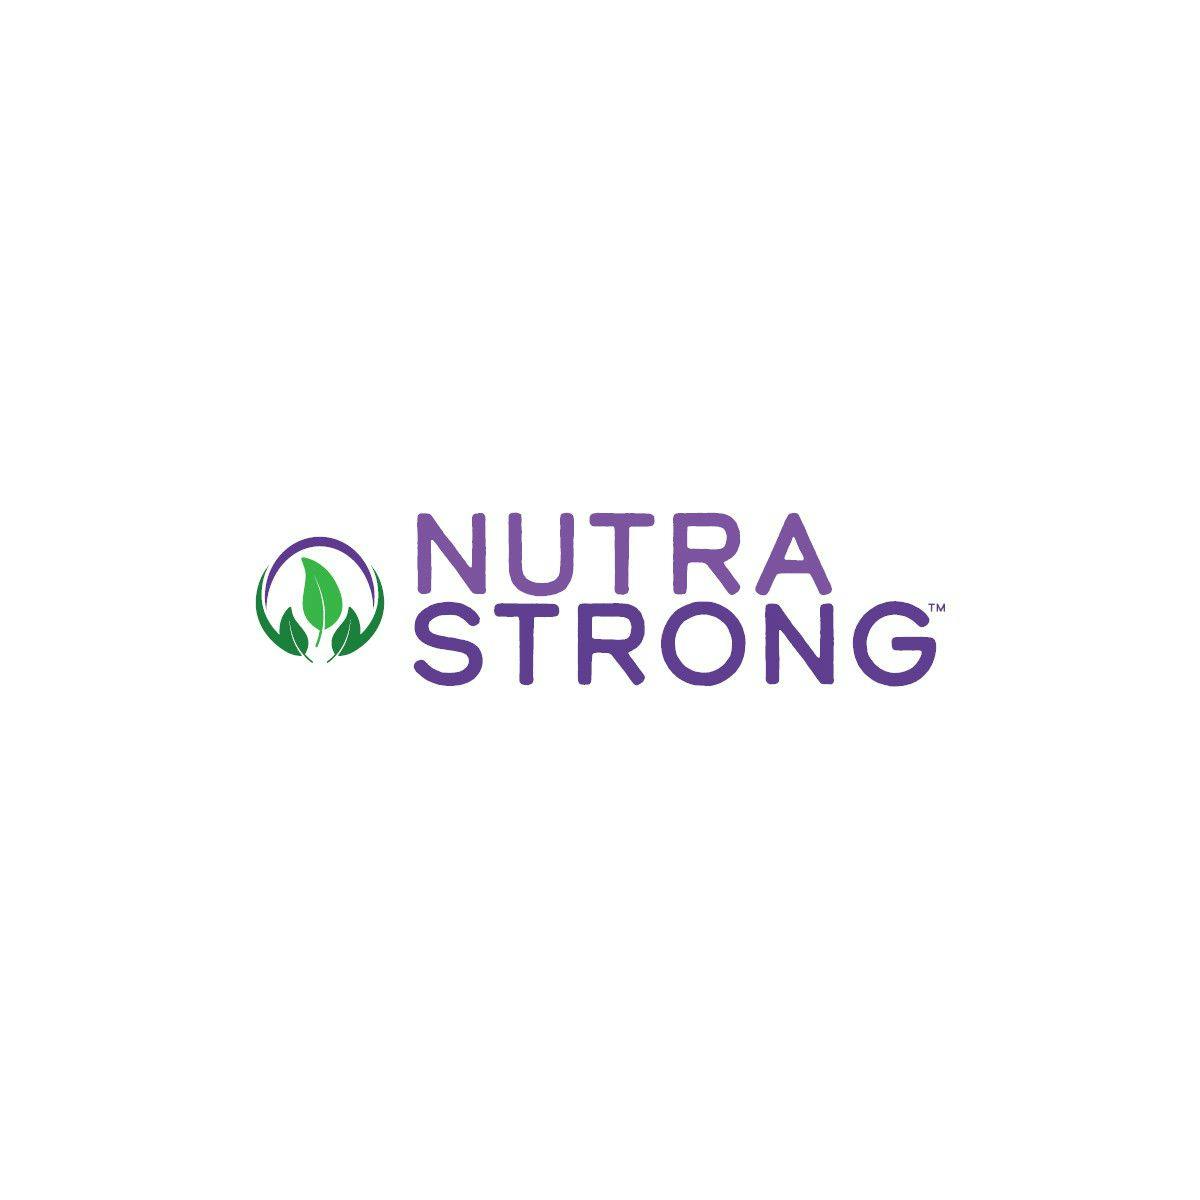 Nutrasource registers trademark for NutraStrong certification globally